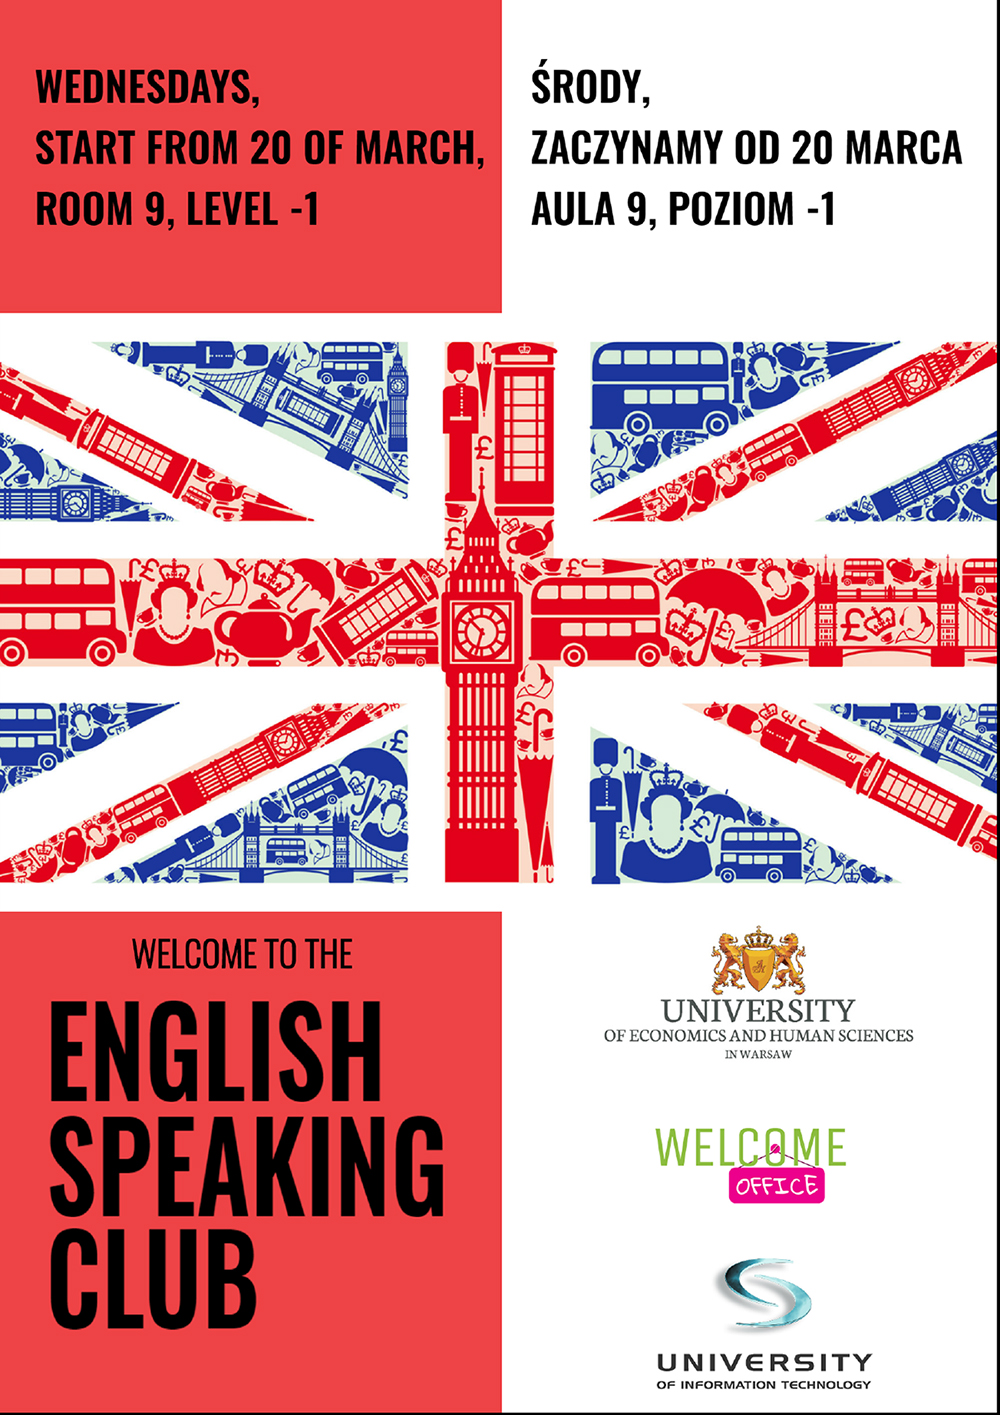 English Speaking Club WelcomeOffice